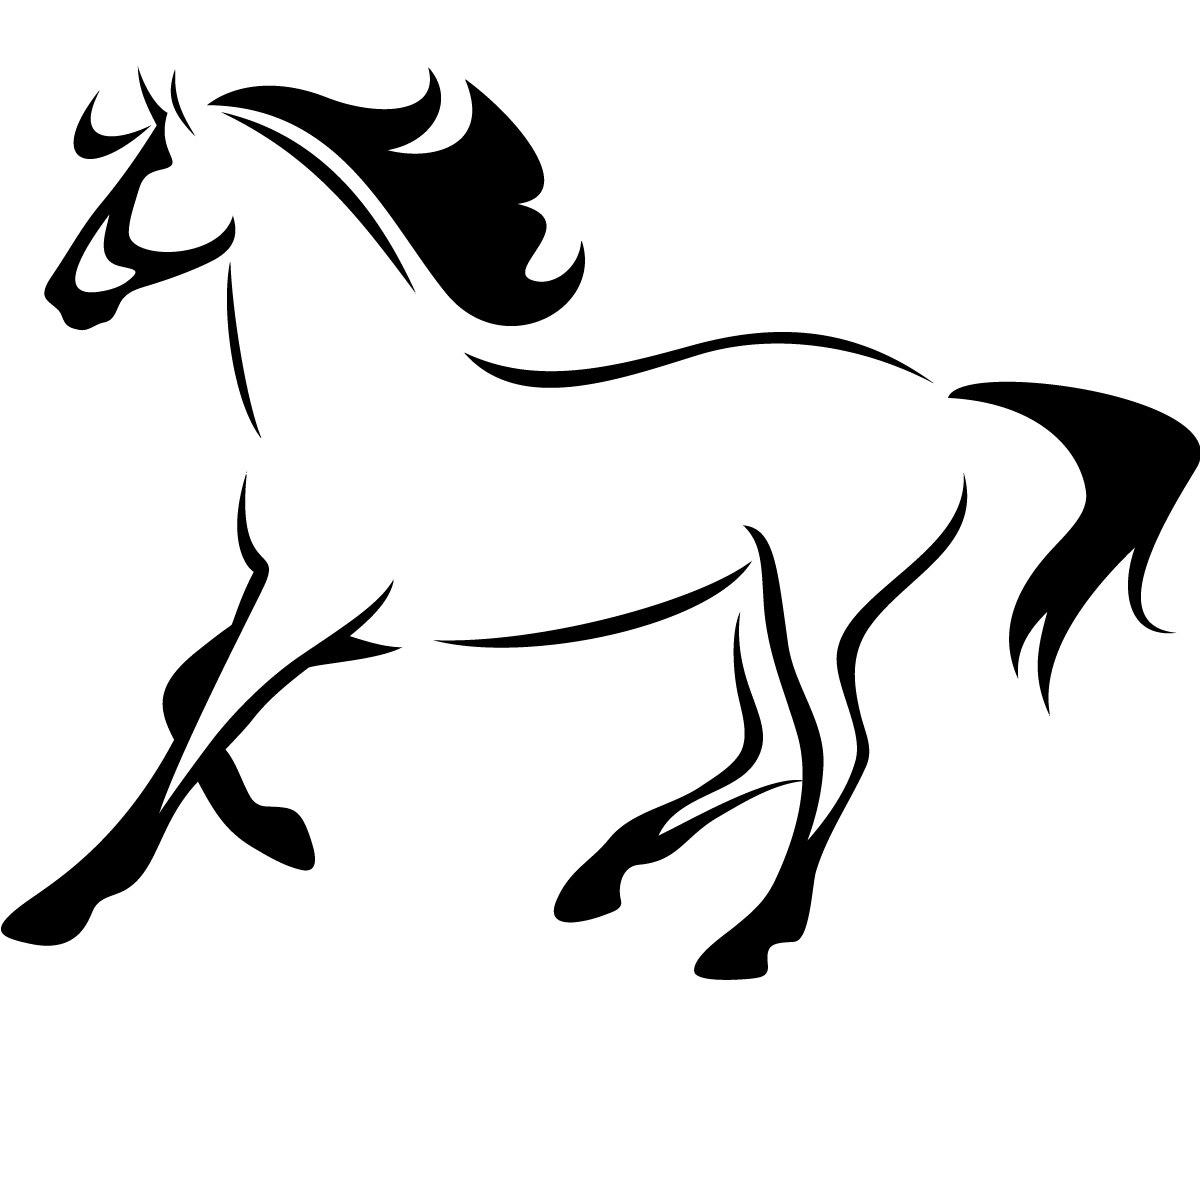 1000+ images about Horse drawings | Pegasus, Arabian ...